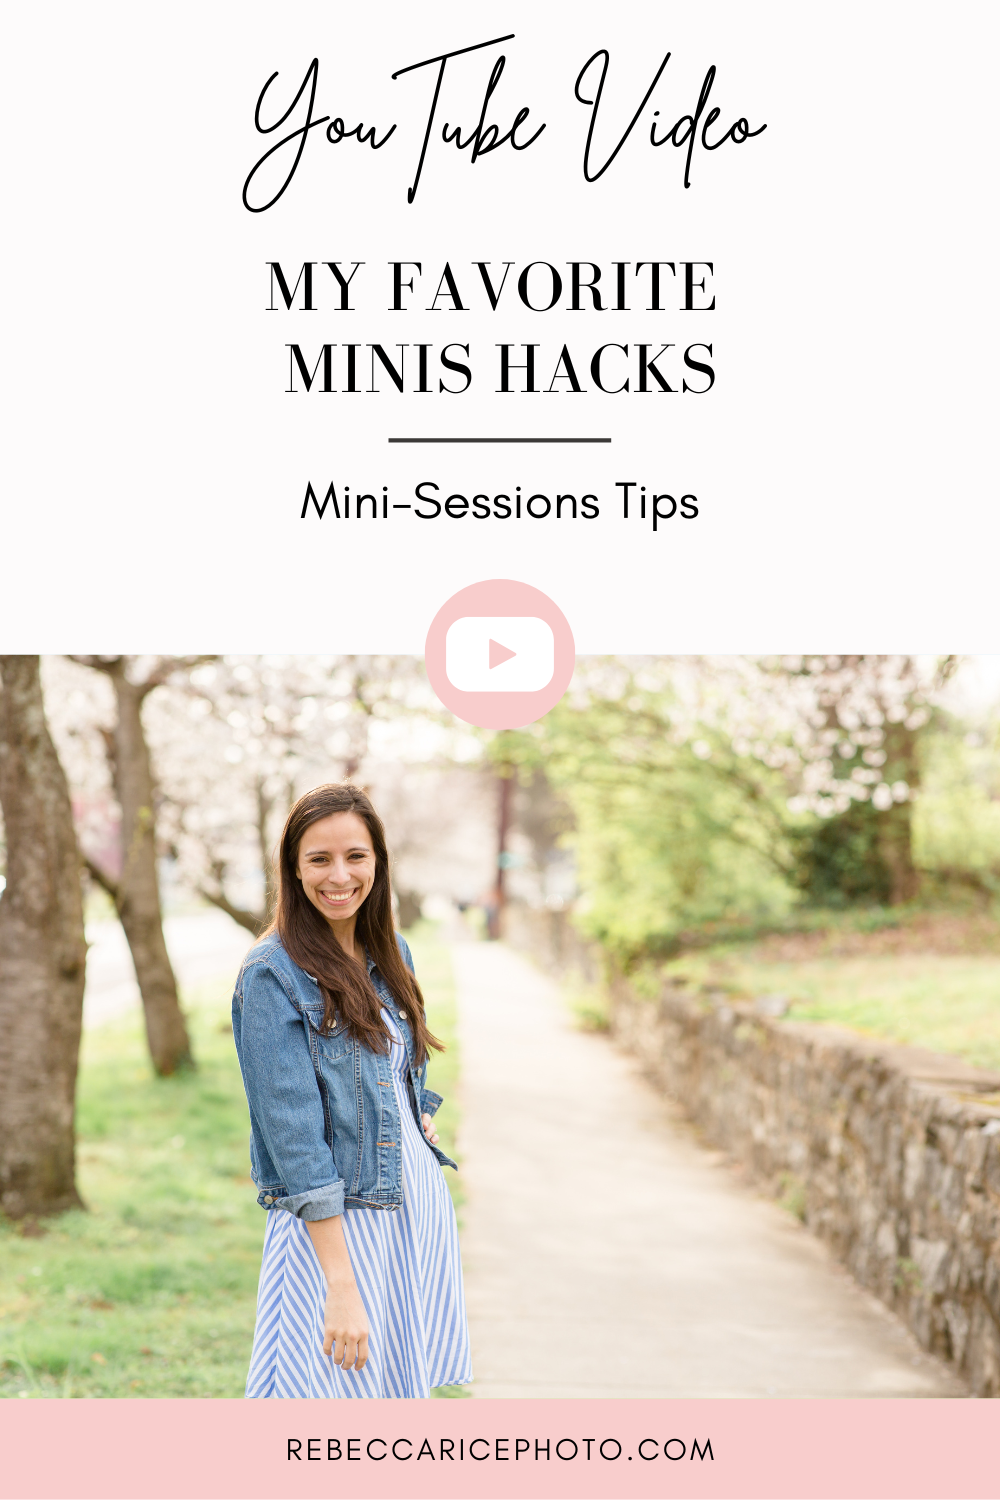 My Favorite Minis Hacks | Mini-Sessions Tips